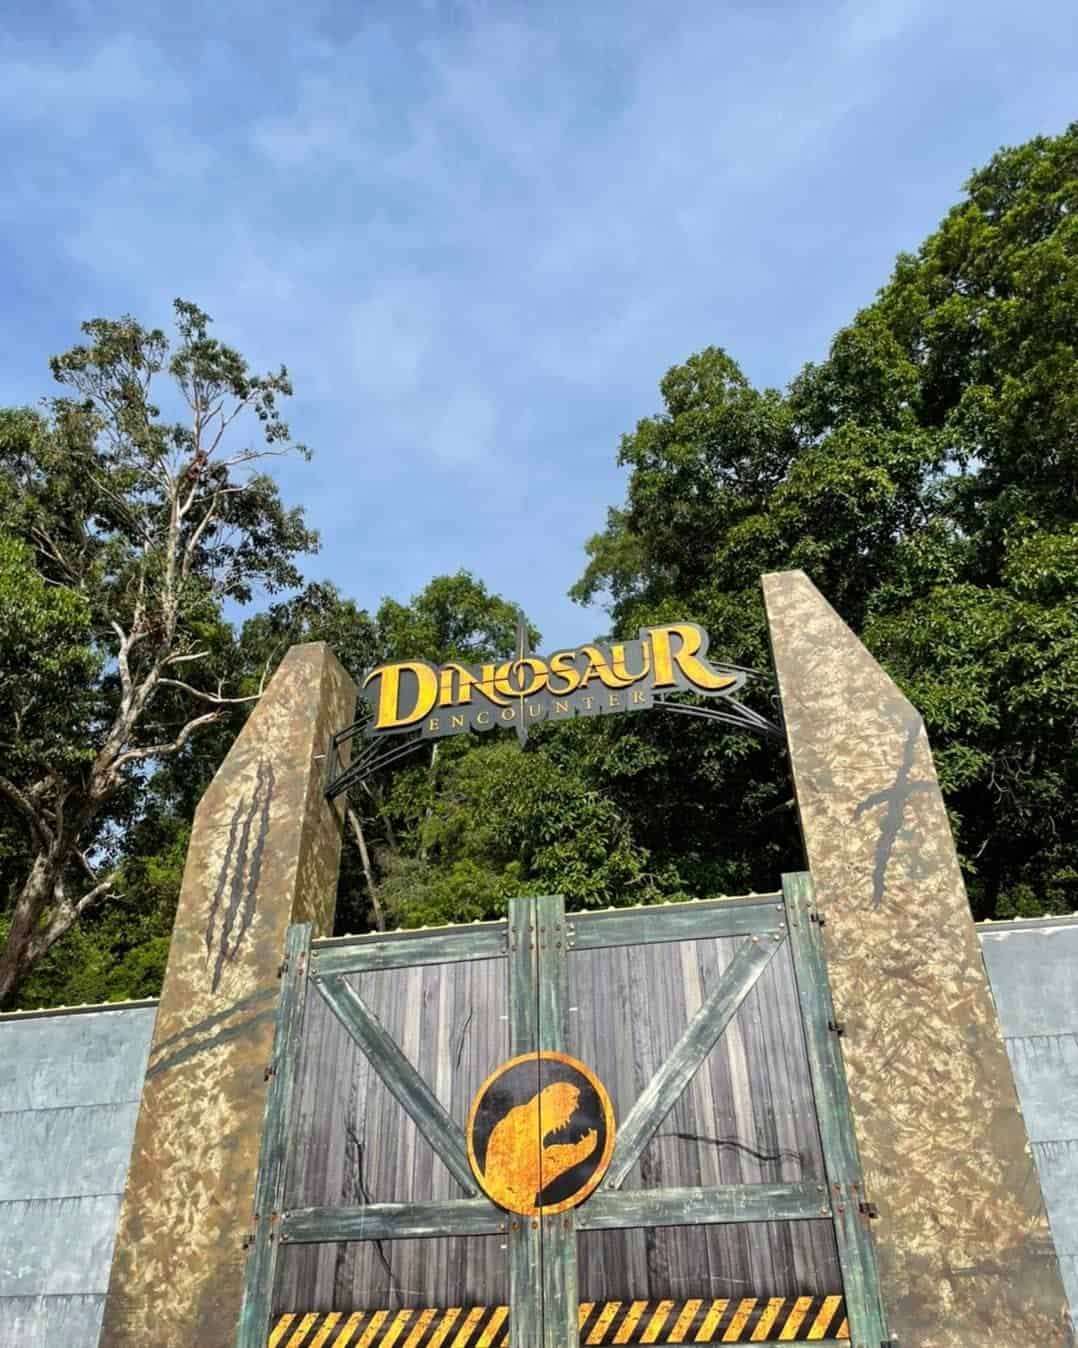 Dinosour Encounter